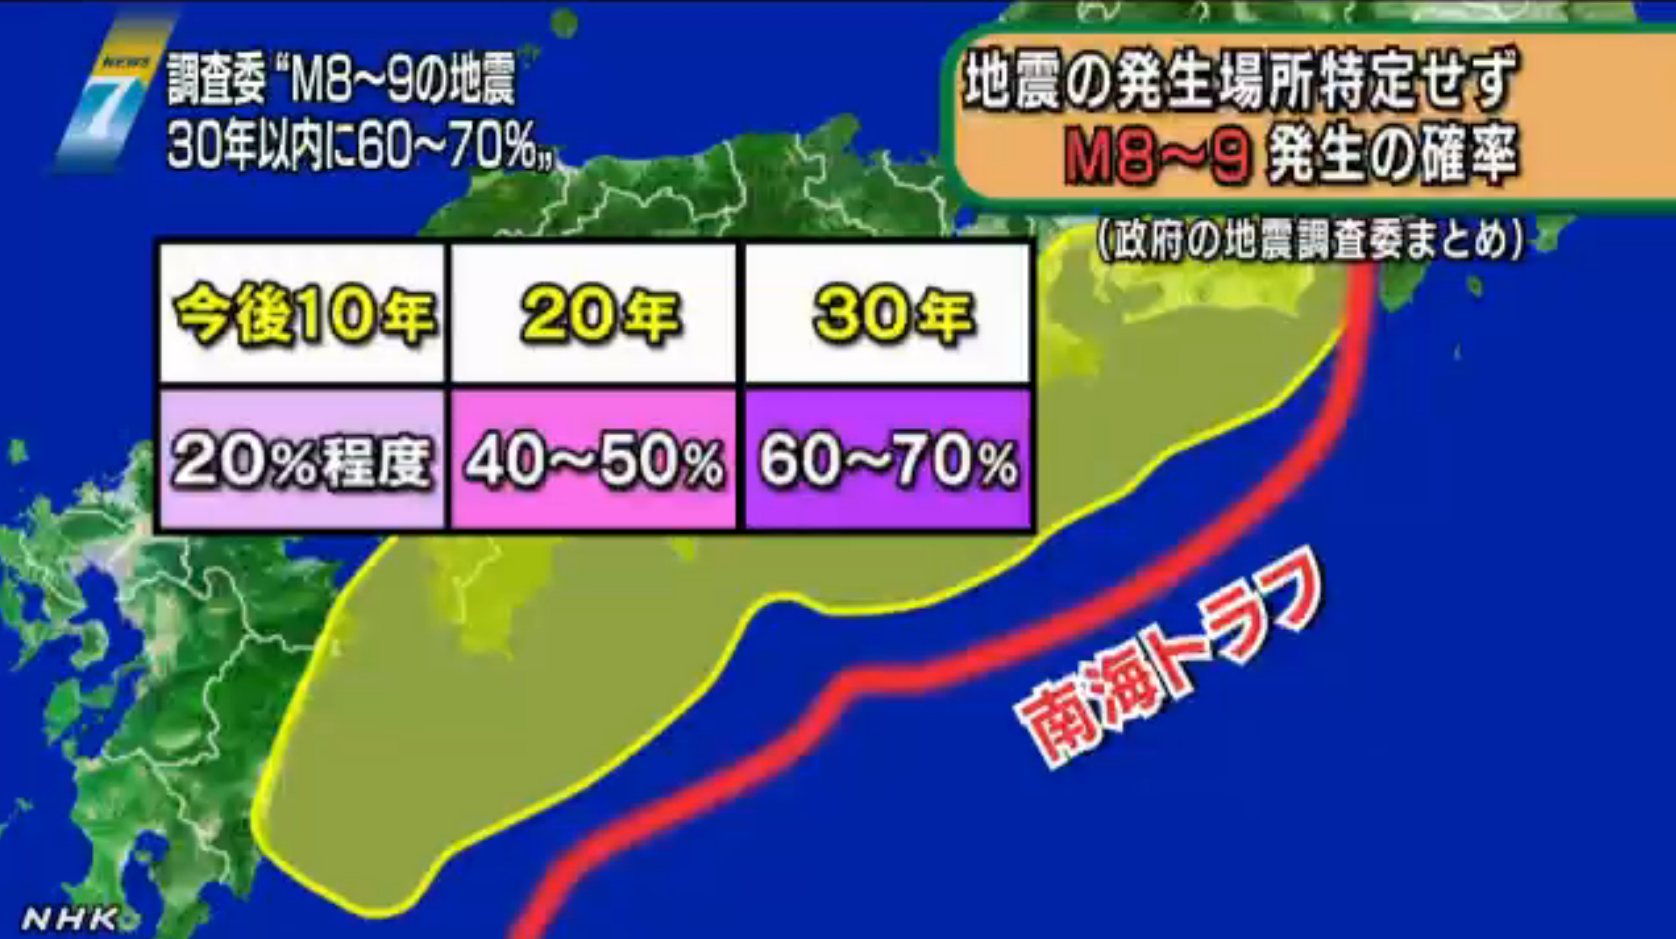 nannkaitorahu kakuritu.jpg?resize=412,232 - 【南海地震予測】他の震災との関連性と発生時期。気になる被害規模は？